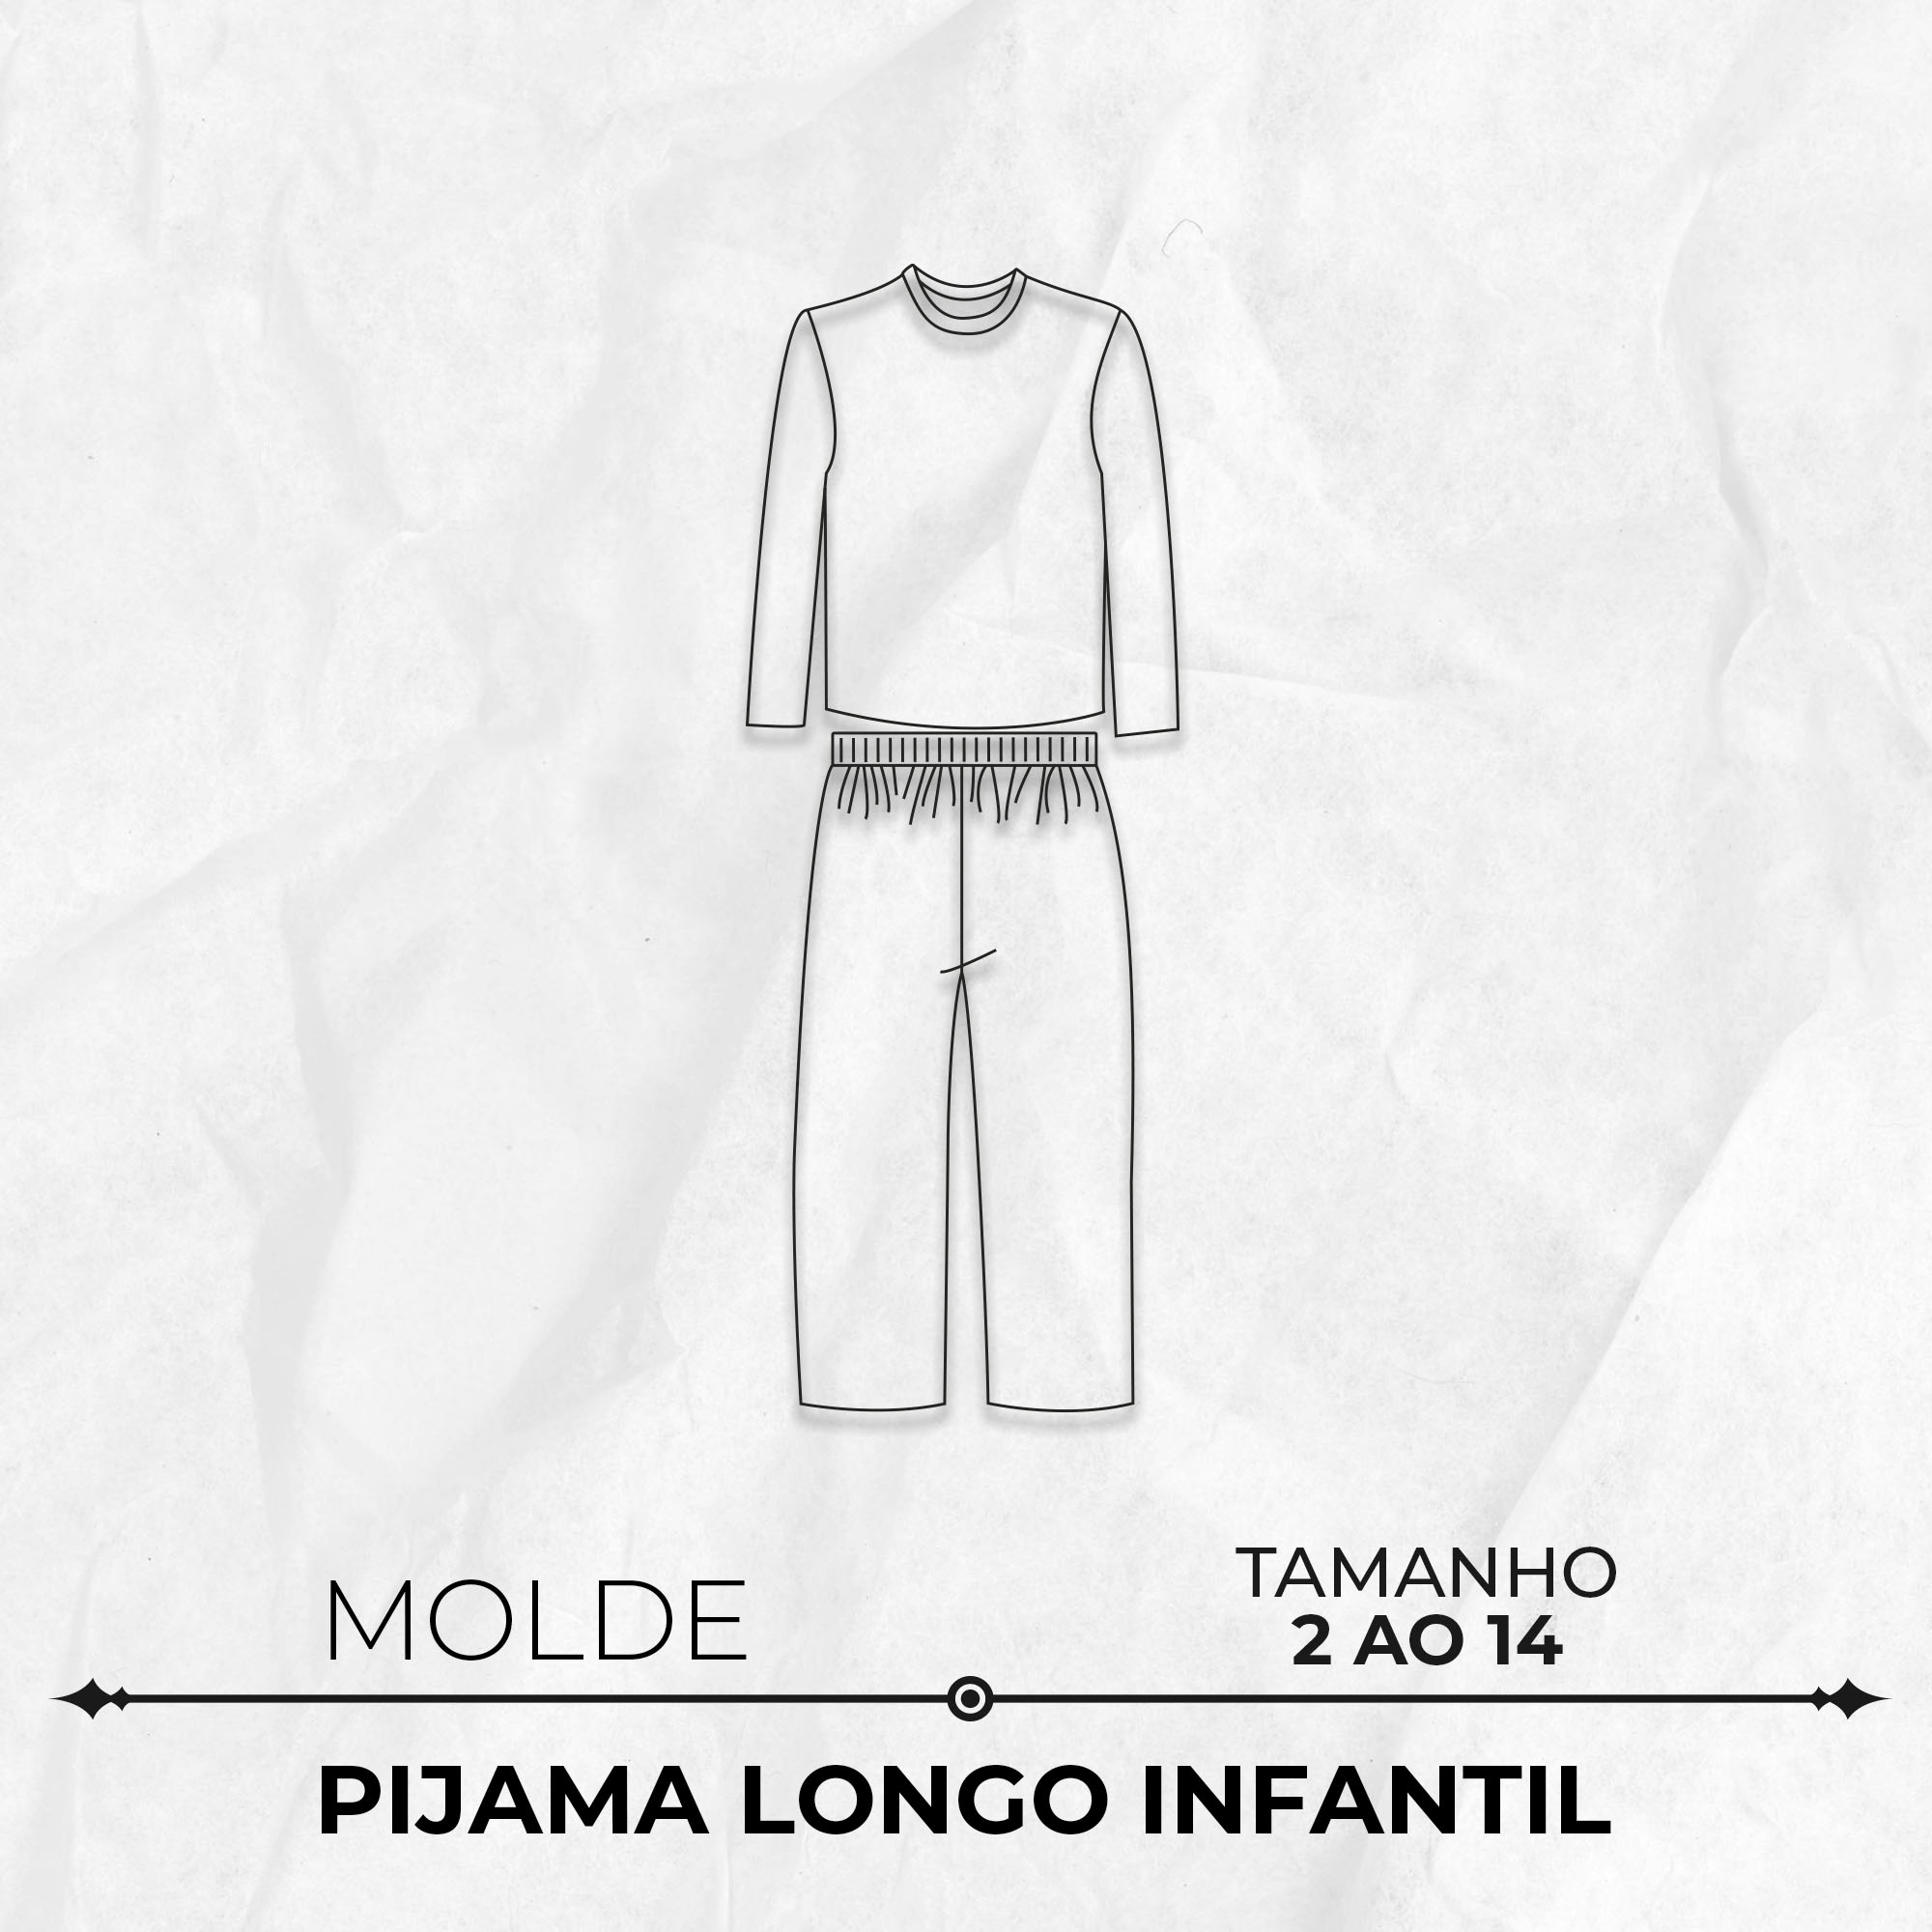 Molde pijama longo infantil tamanho 2 ao 14 by Marlene Mukai